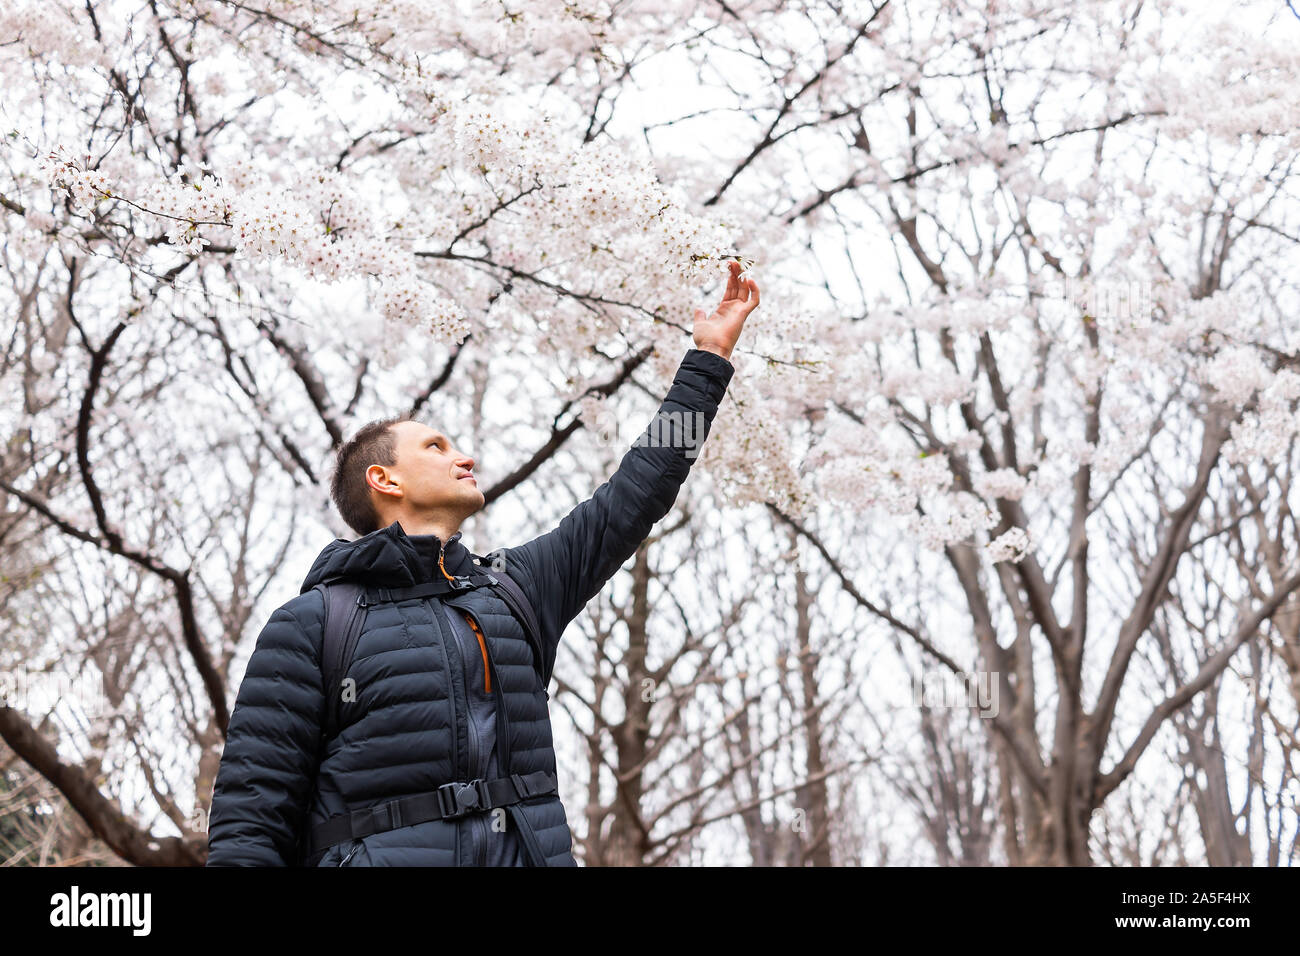 Tokyo, Japan Yoyogi park with young tourist man reaching touching sakura flowers under cherry blossom tree Stock Photo